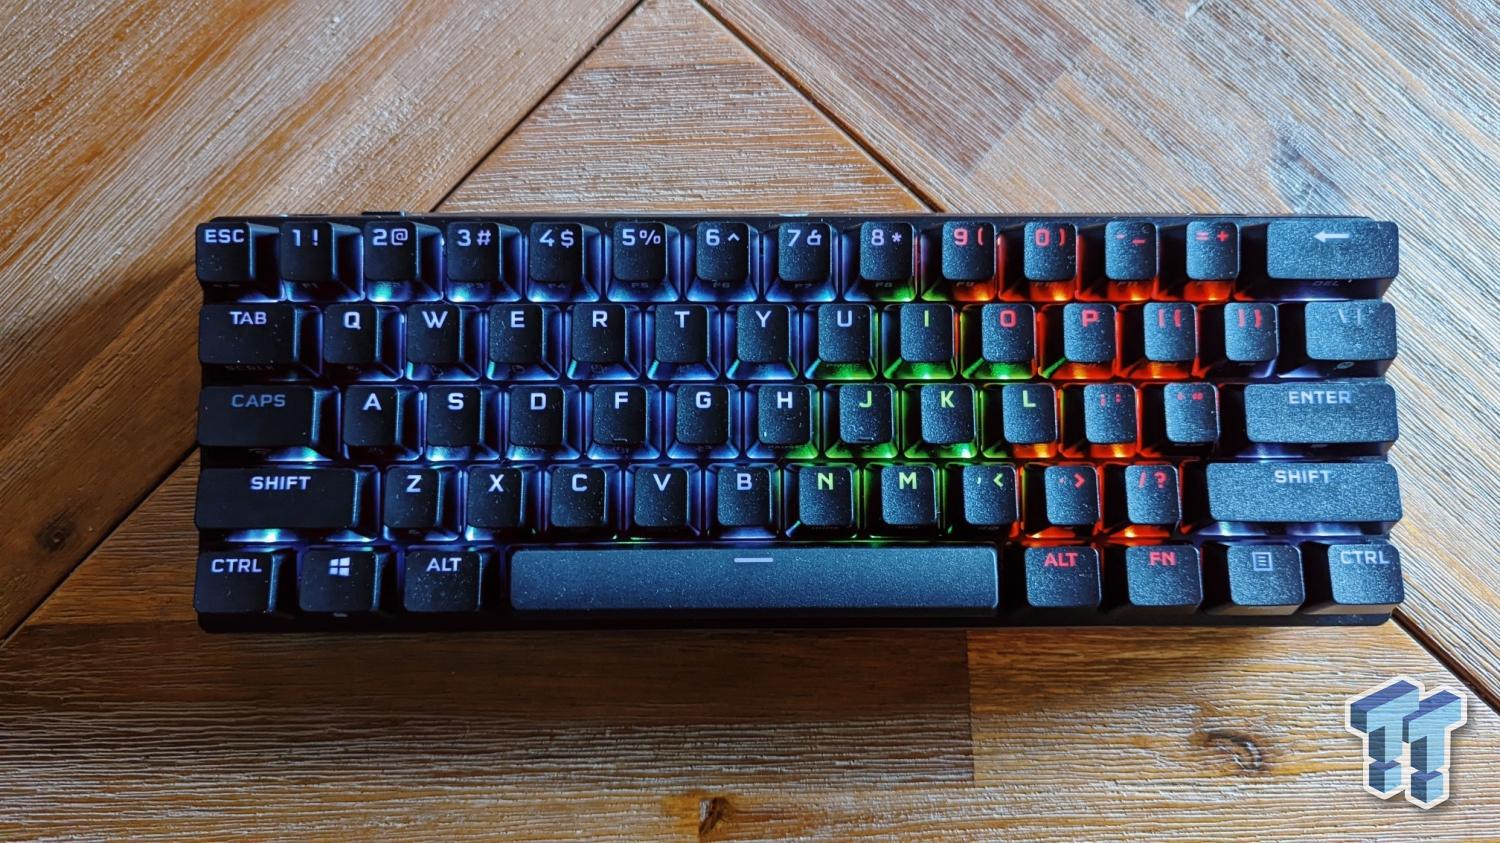 Corsair K70 RGB MINI Keyboard Review